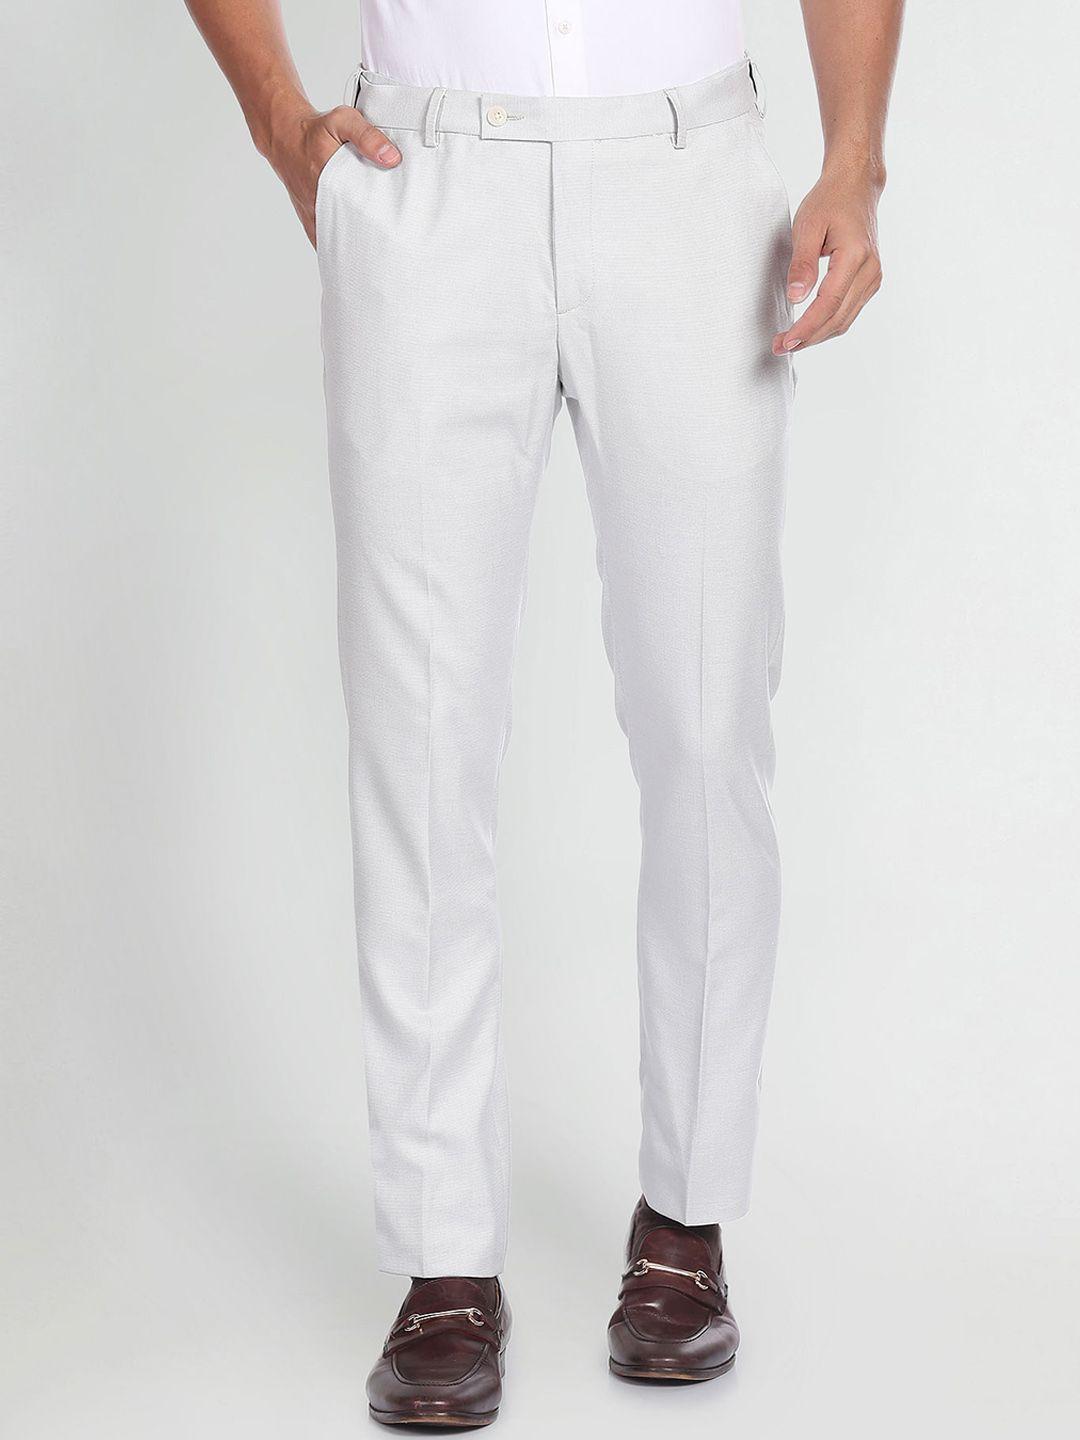 arrow-men-white-trousers